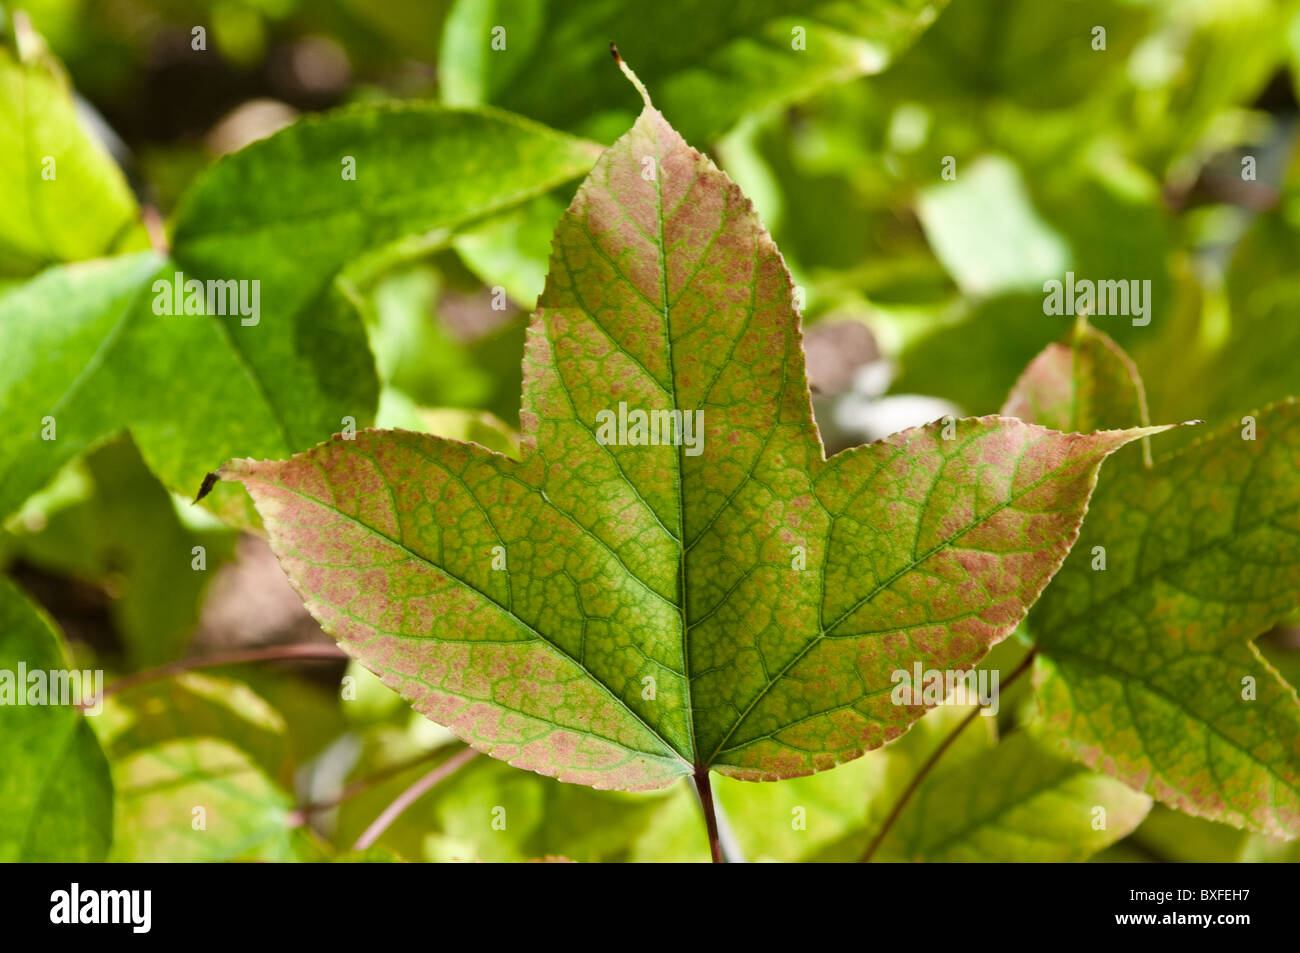 Leaf of Liquidambar Formosana, origin China, Park Borely, Marseille, France Stock Photo